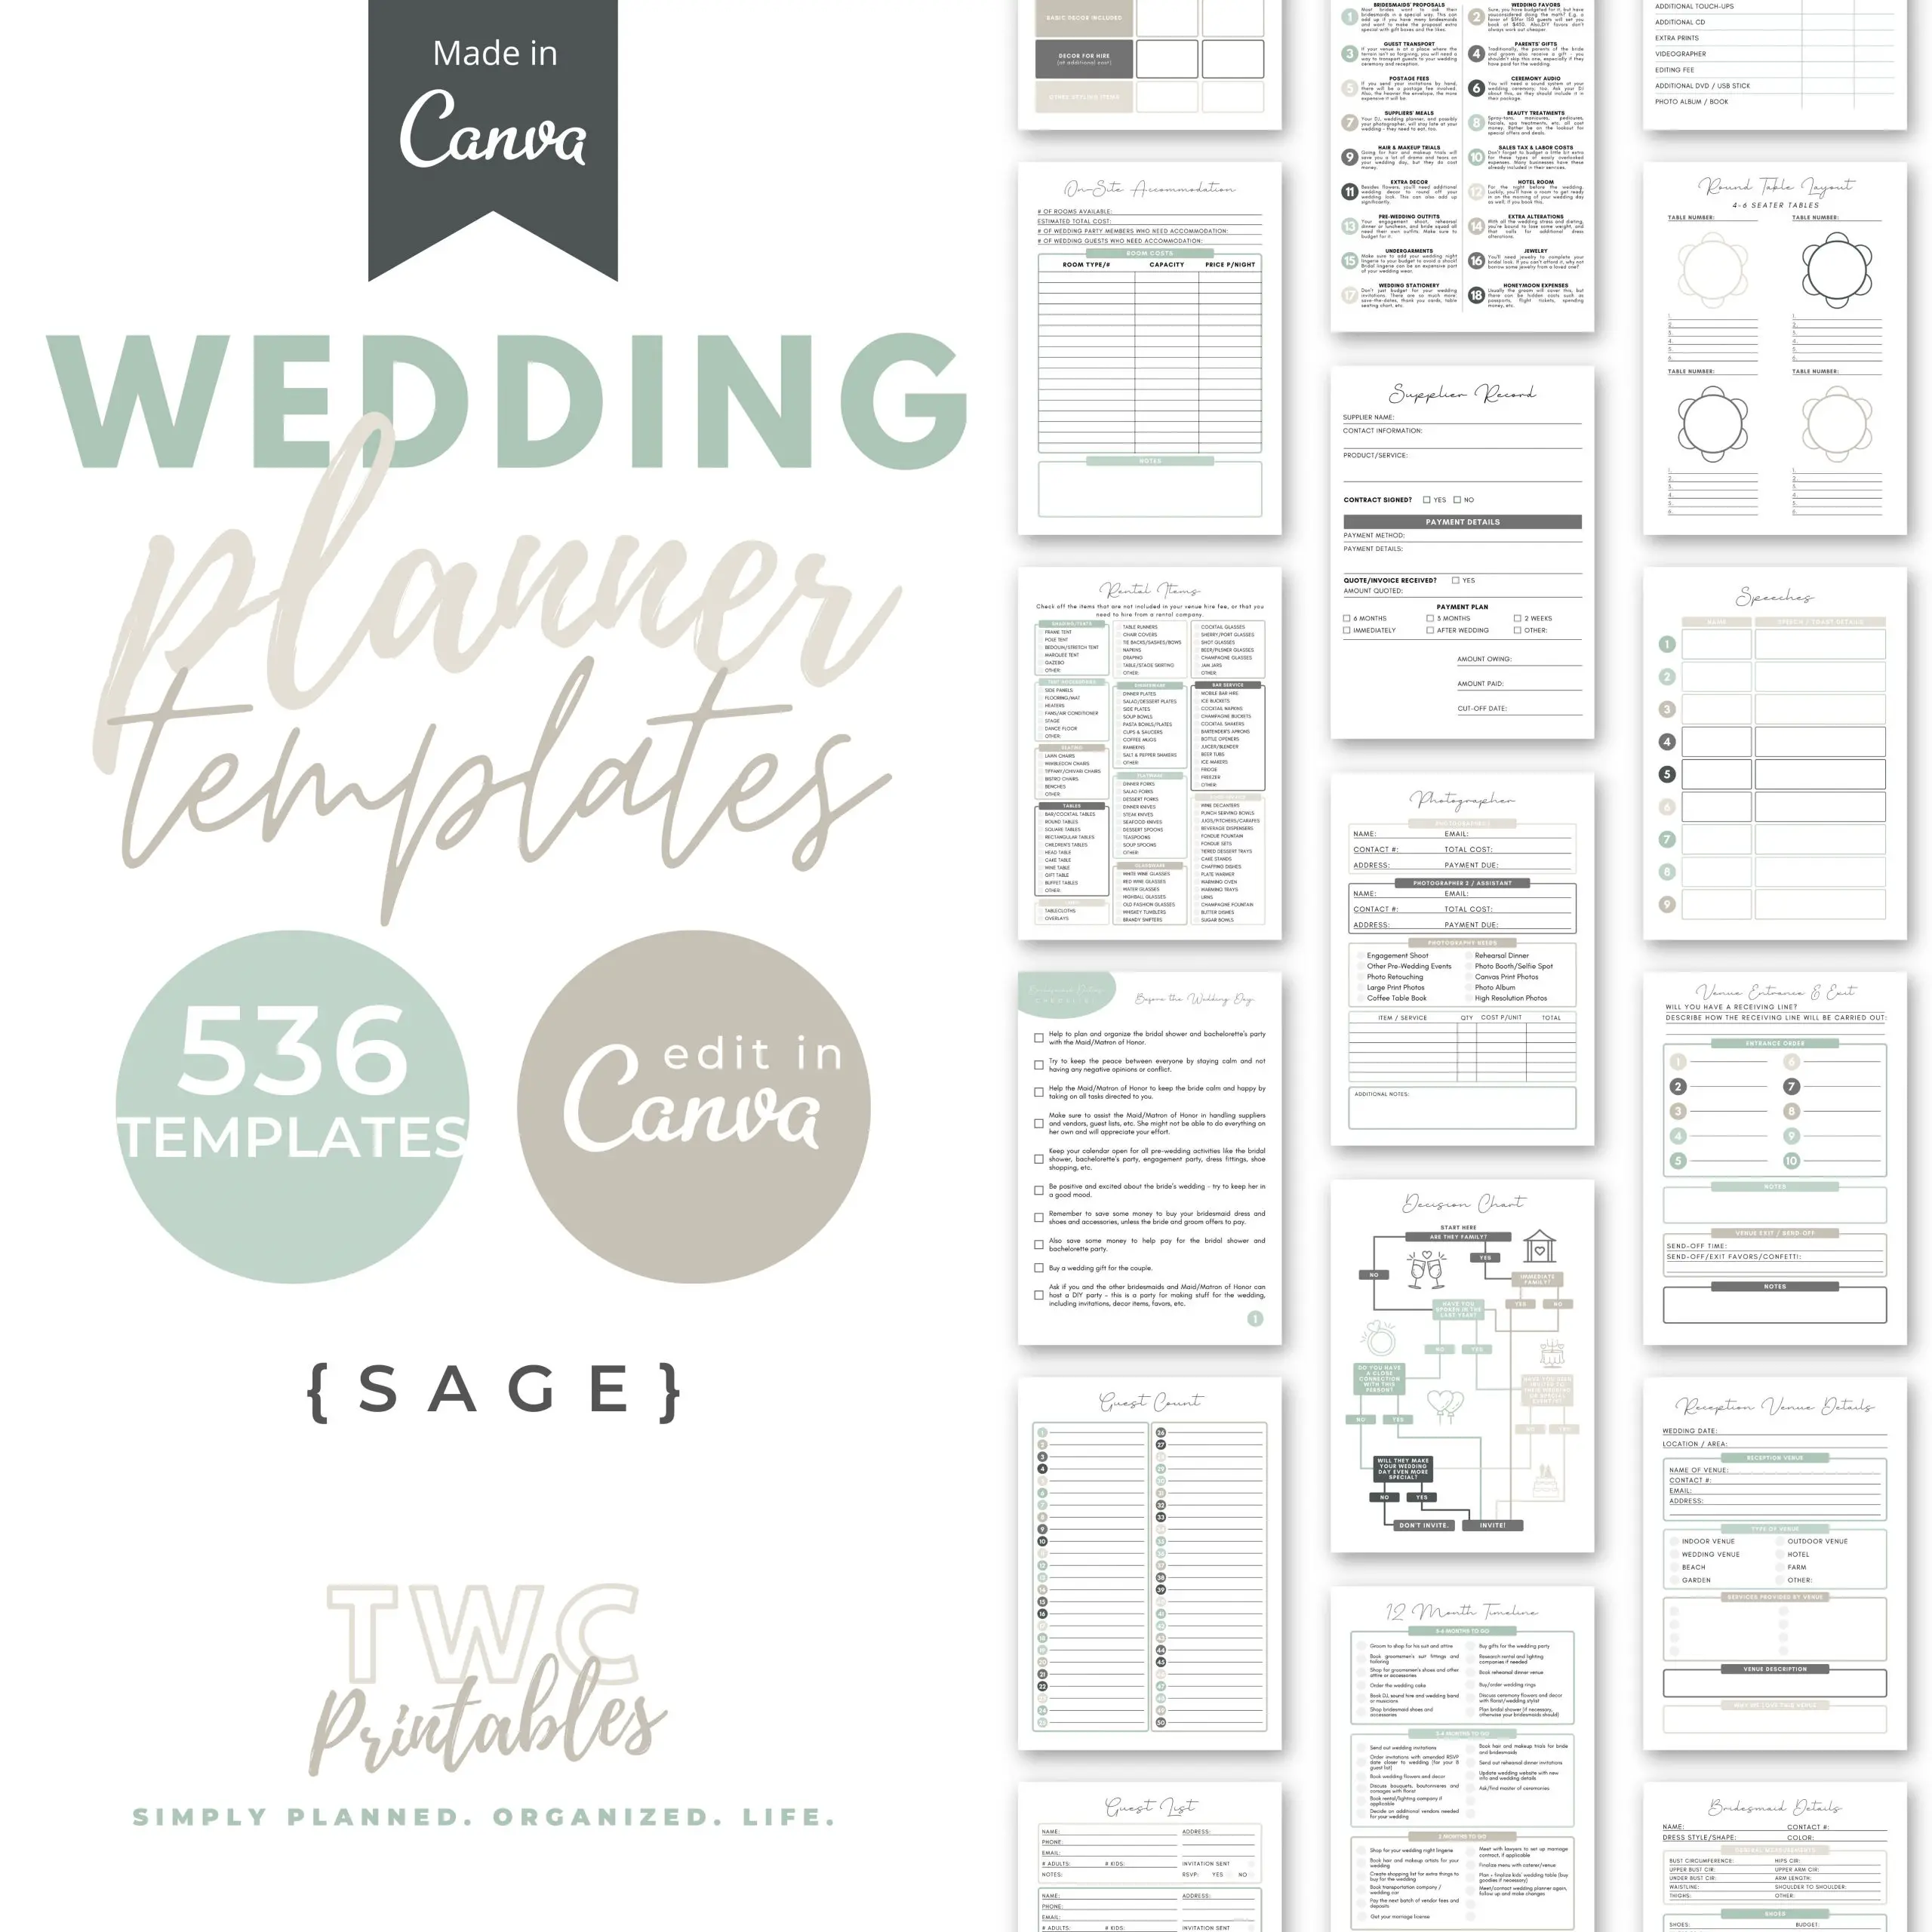 Sage wedding planner templates for Canva - The Wedding Shop - The Wedding Club